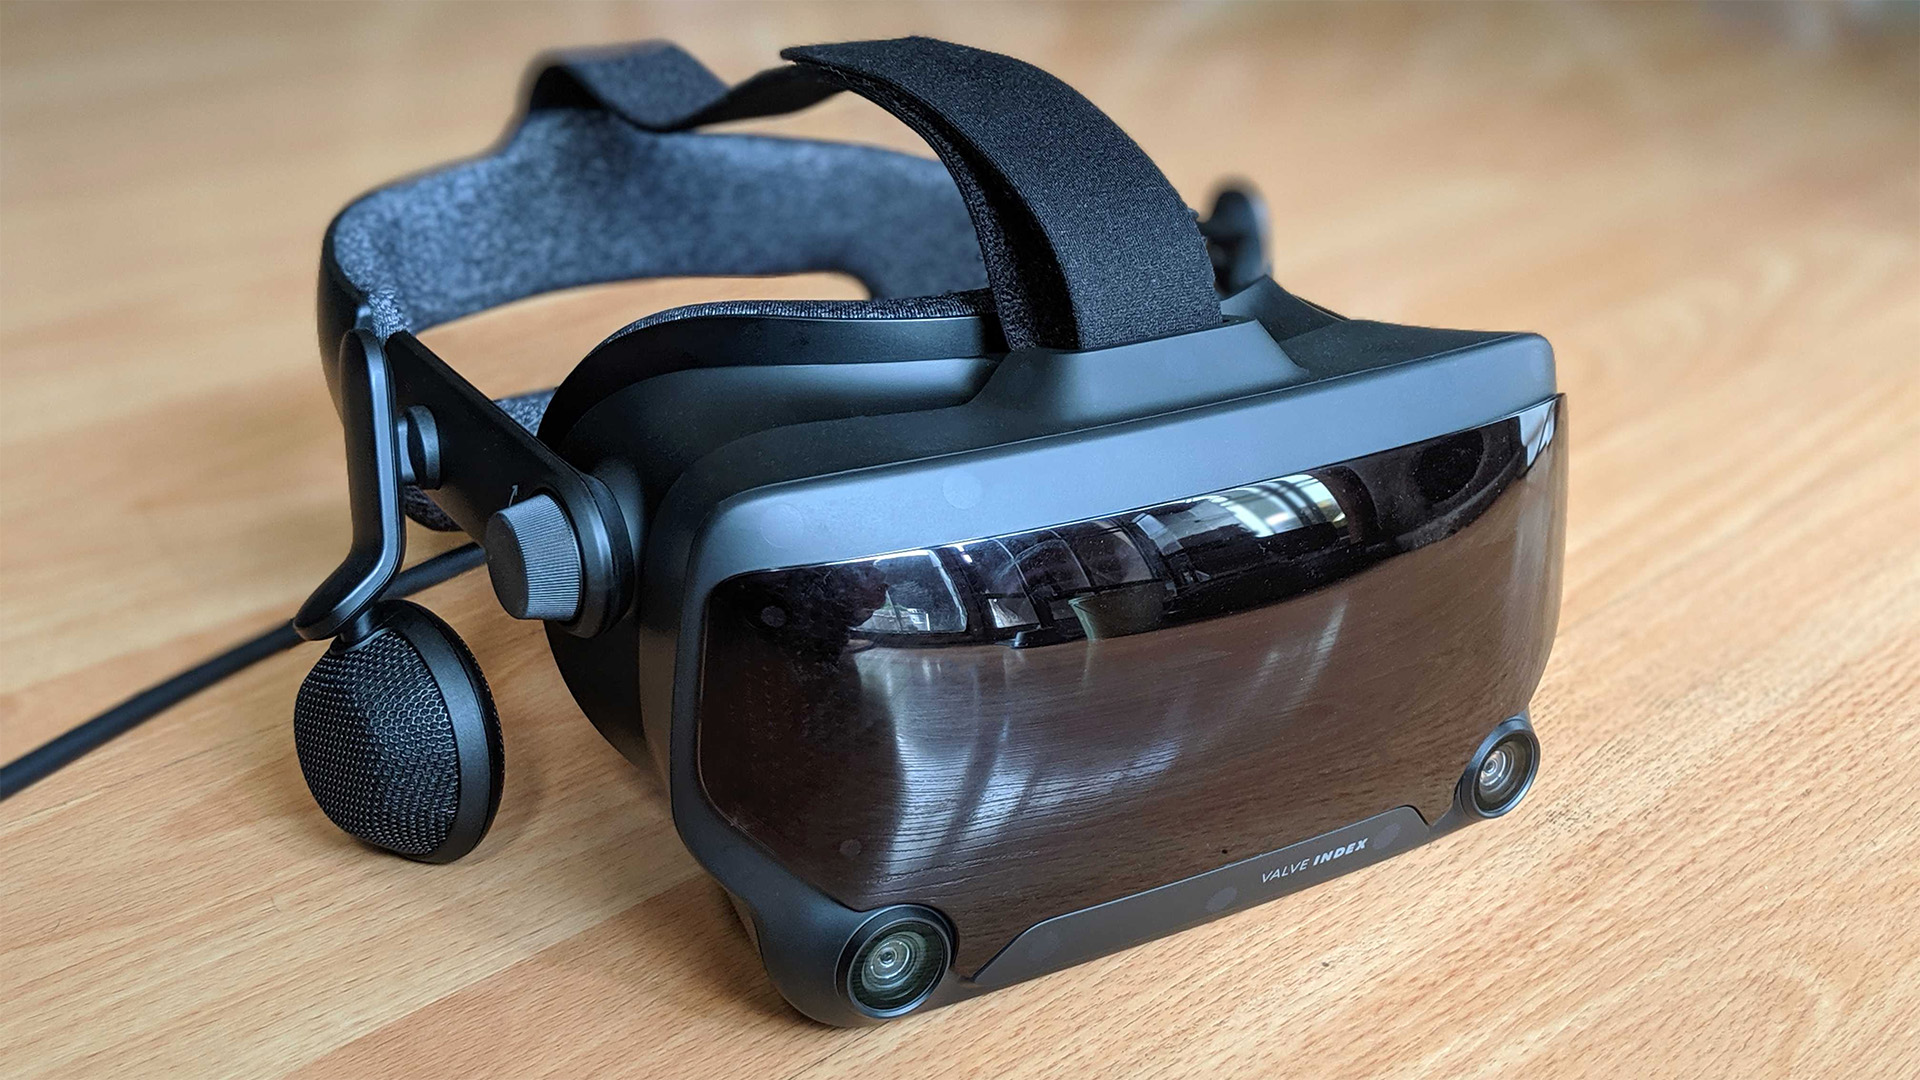 Valve Index virtual reality headset